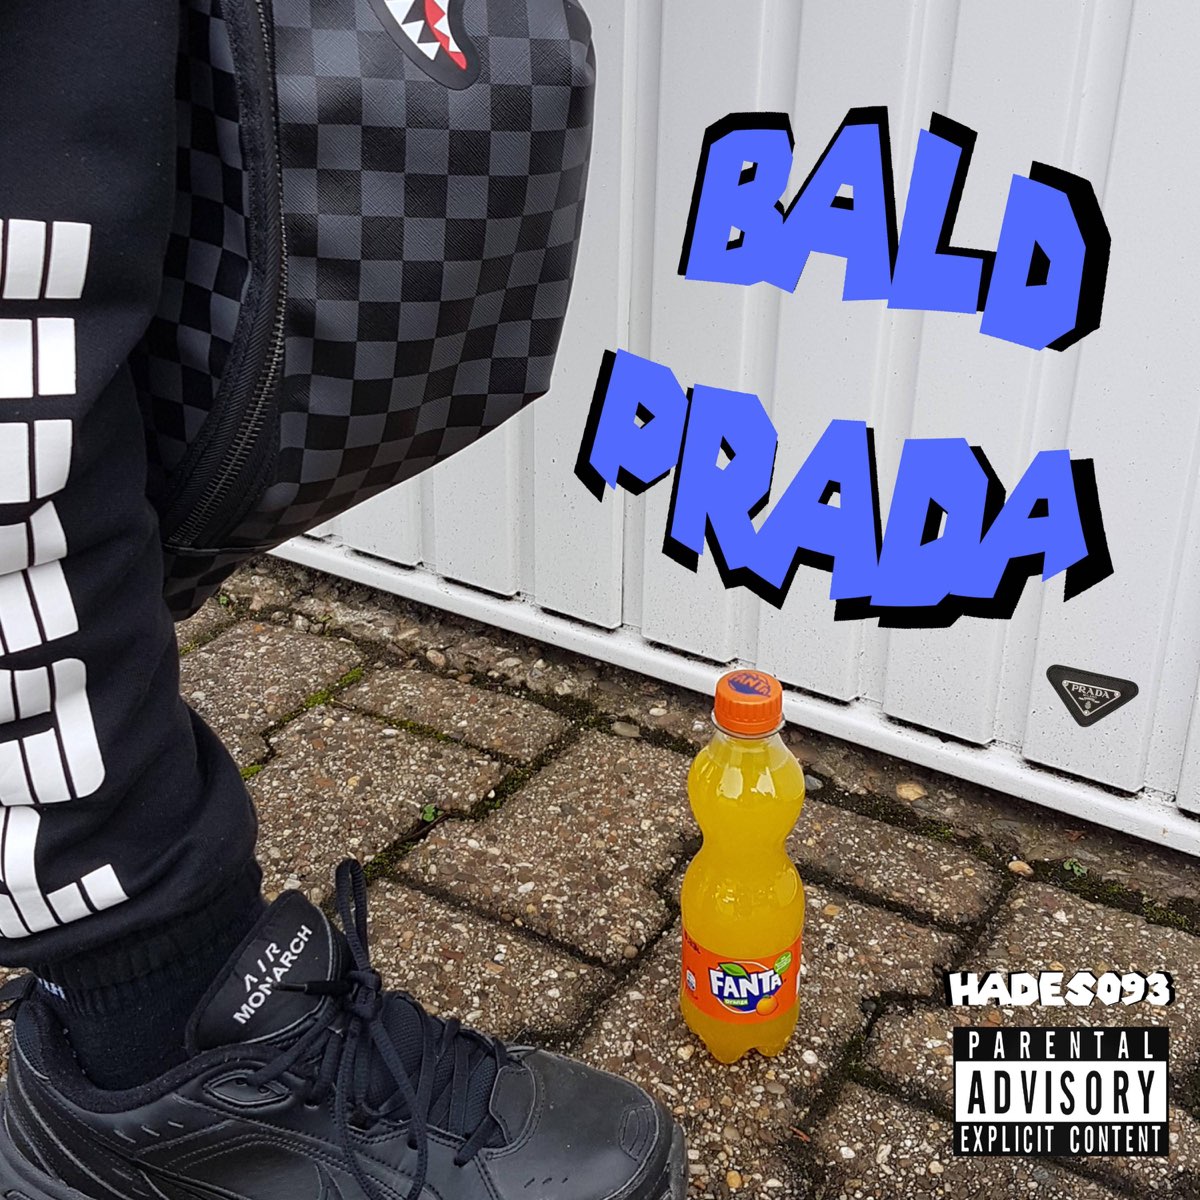 Bald Prada - Single by ZAX & Hades093 on Apple Music